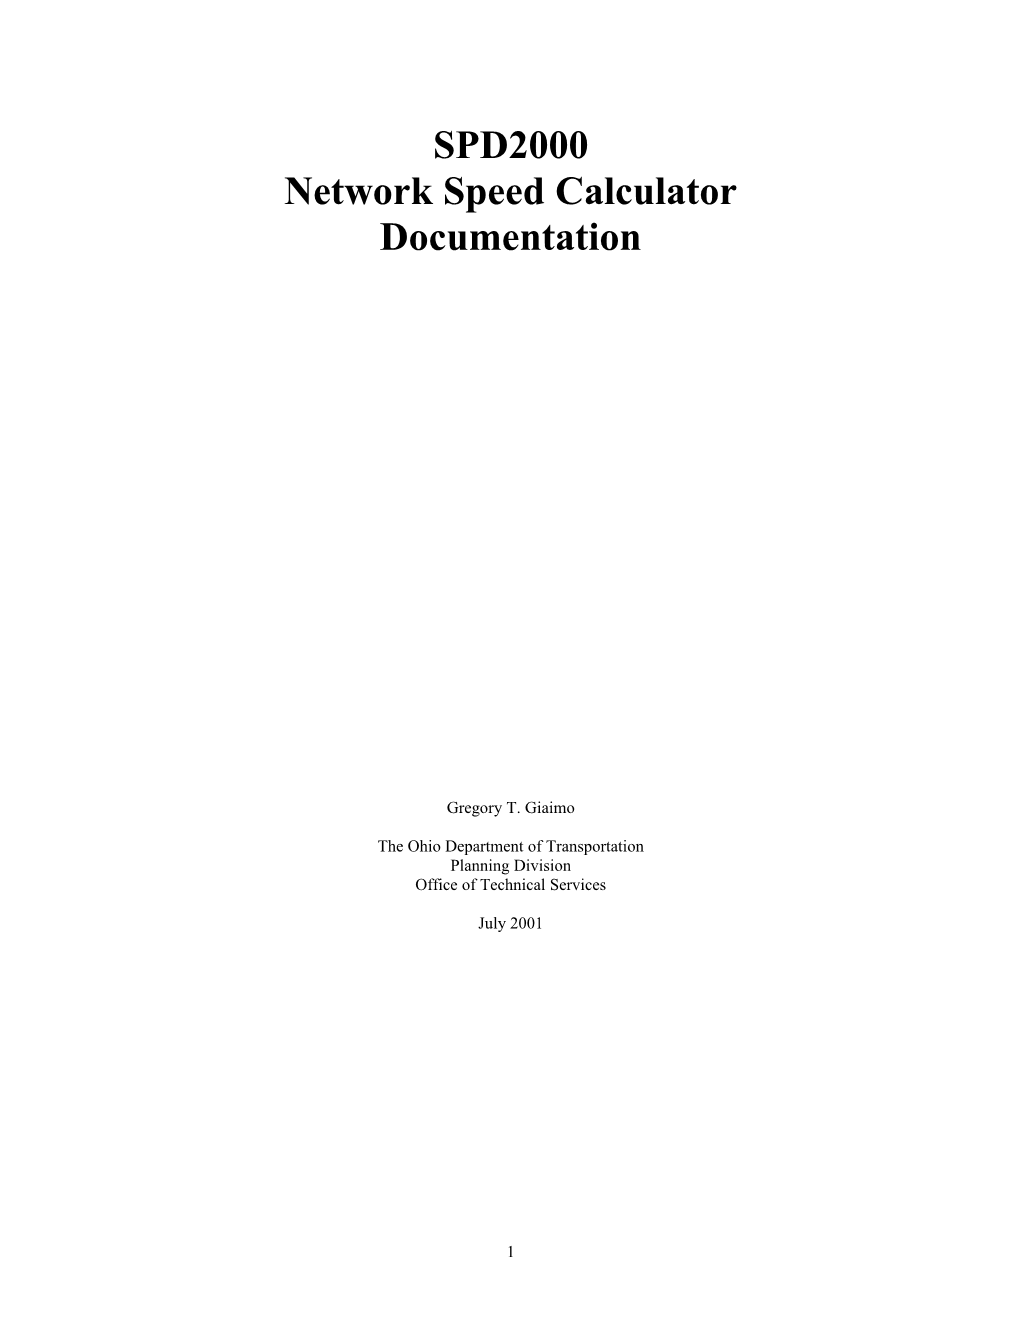 Network Speed Calculator Documentation